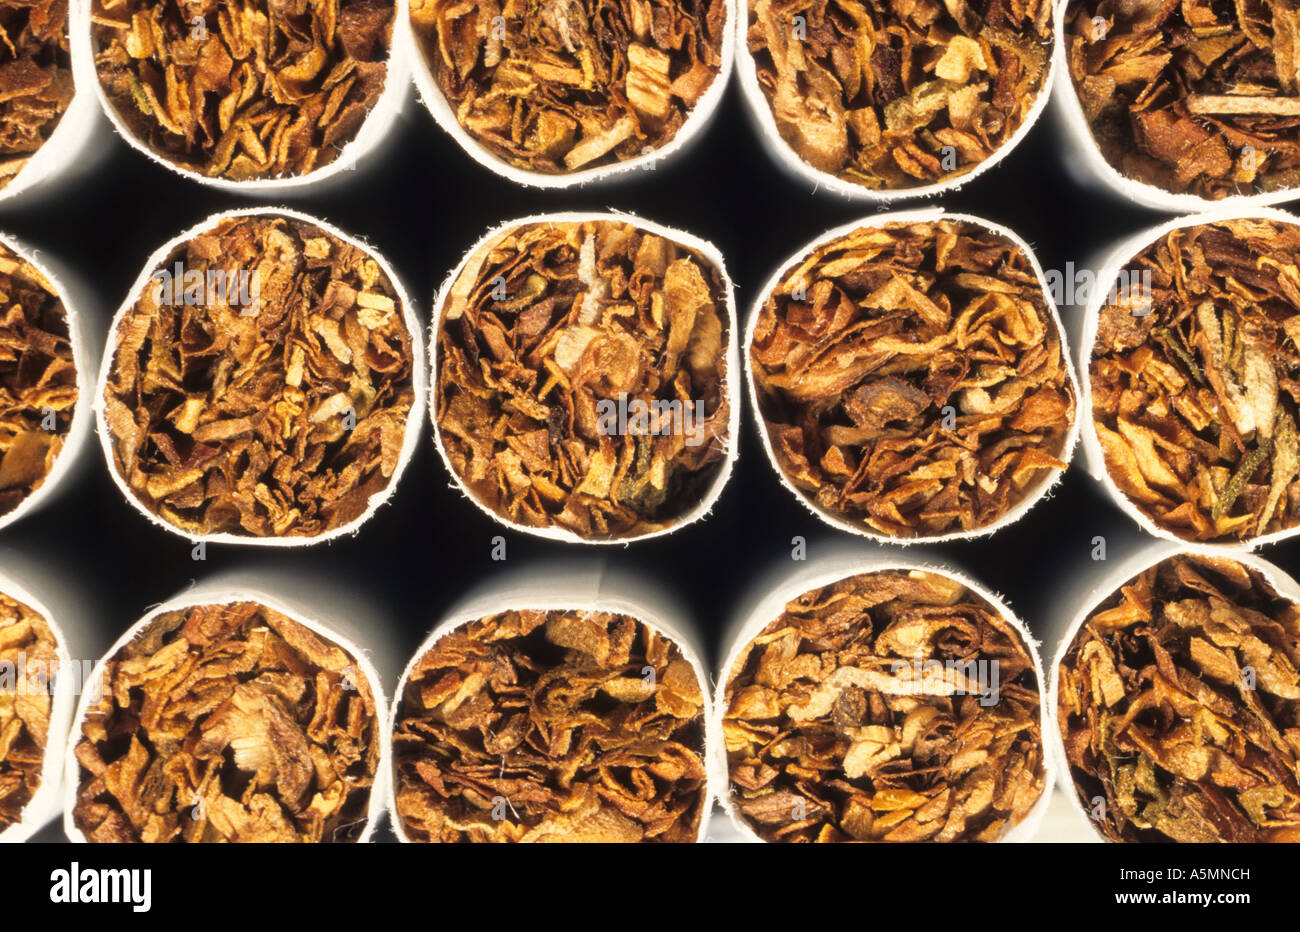 Zigaretten cigaretes Tabak tobacco tabacco Genußmittel Tabakwaren tabacchi genere voluttuario semiluxura food Zigarette Zigarett Stock Photo